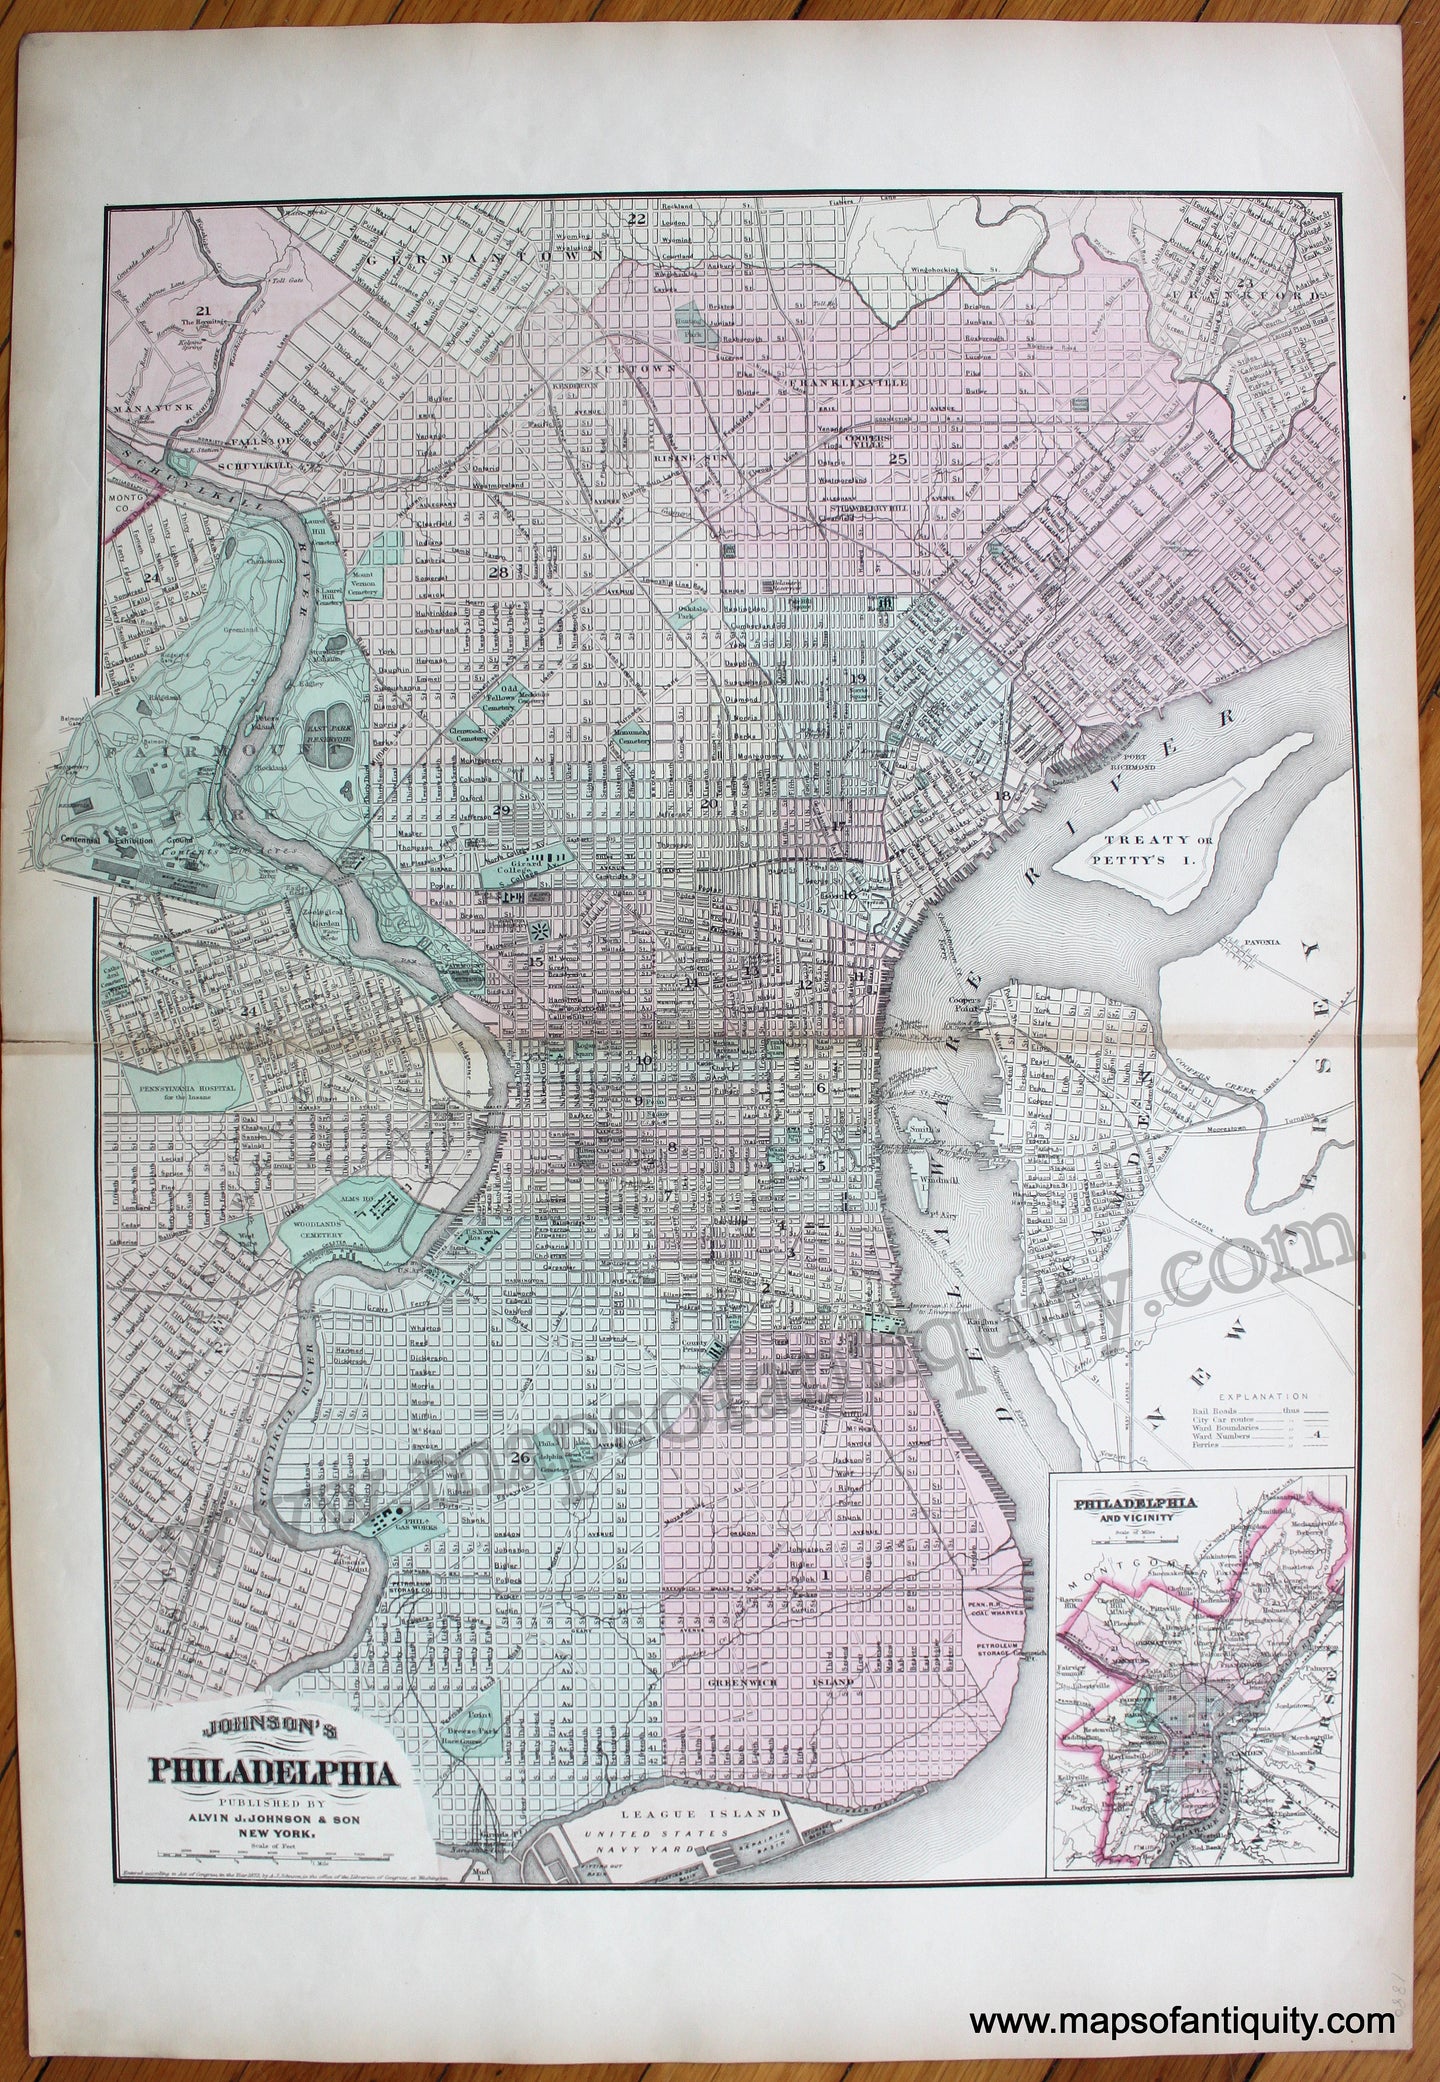 Antique-Hand-Colored-Map-Johnson's-Philadelphia-1880-Alvin-J.-Johnson-&-Son-Mid-Atlantic-1800s-19th-century-Maps-of-Antiquity